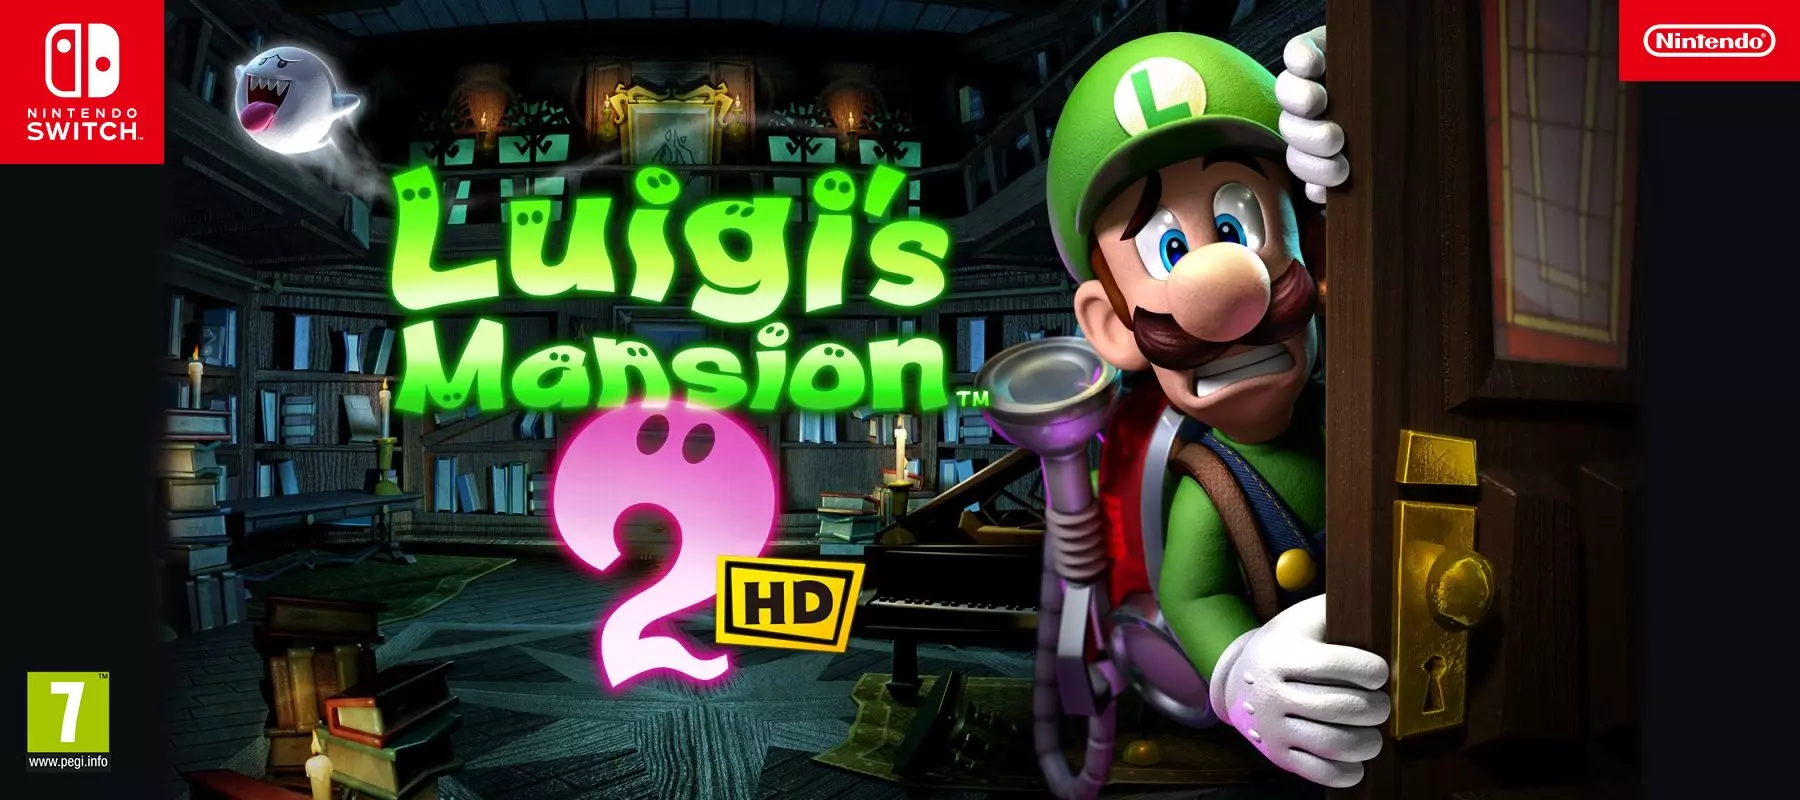 Luigi Mansion 2 HD